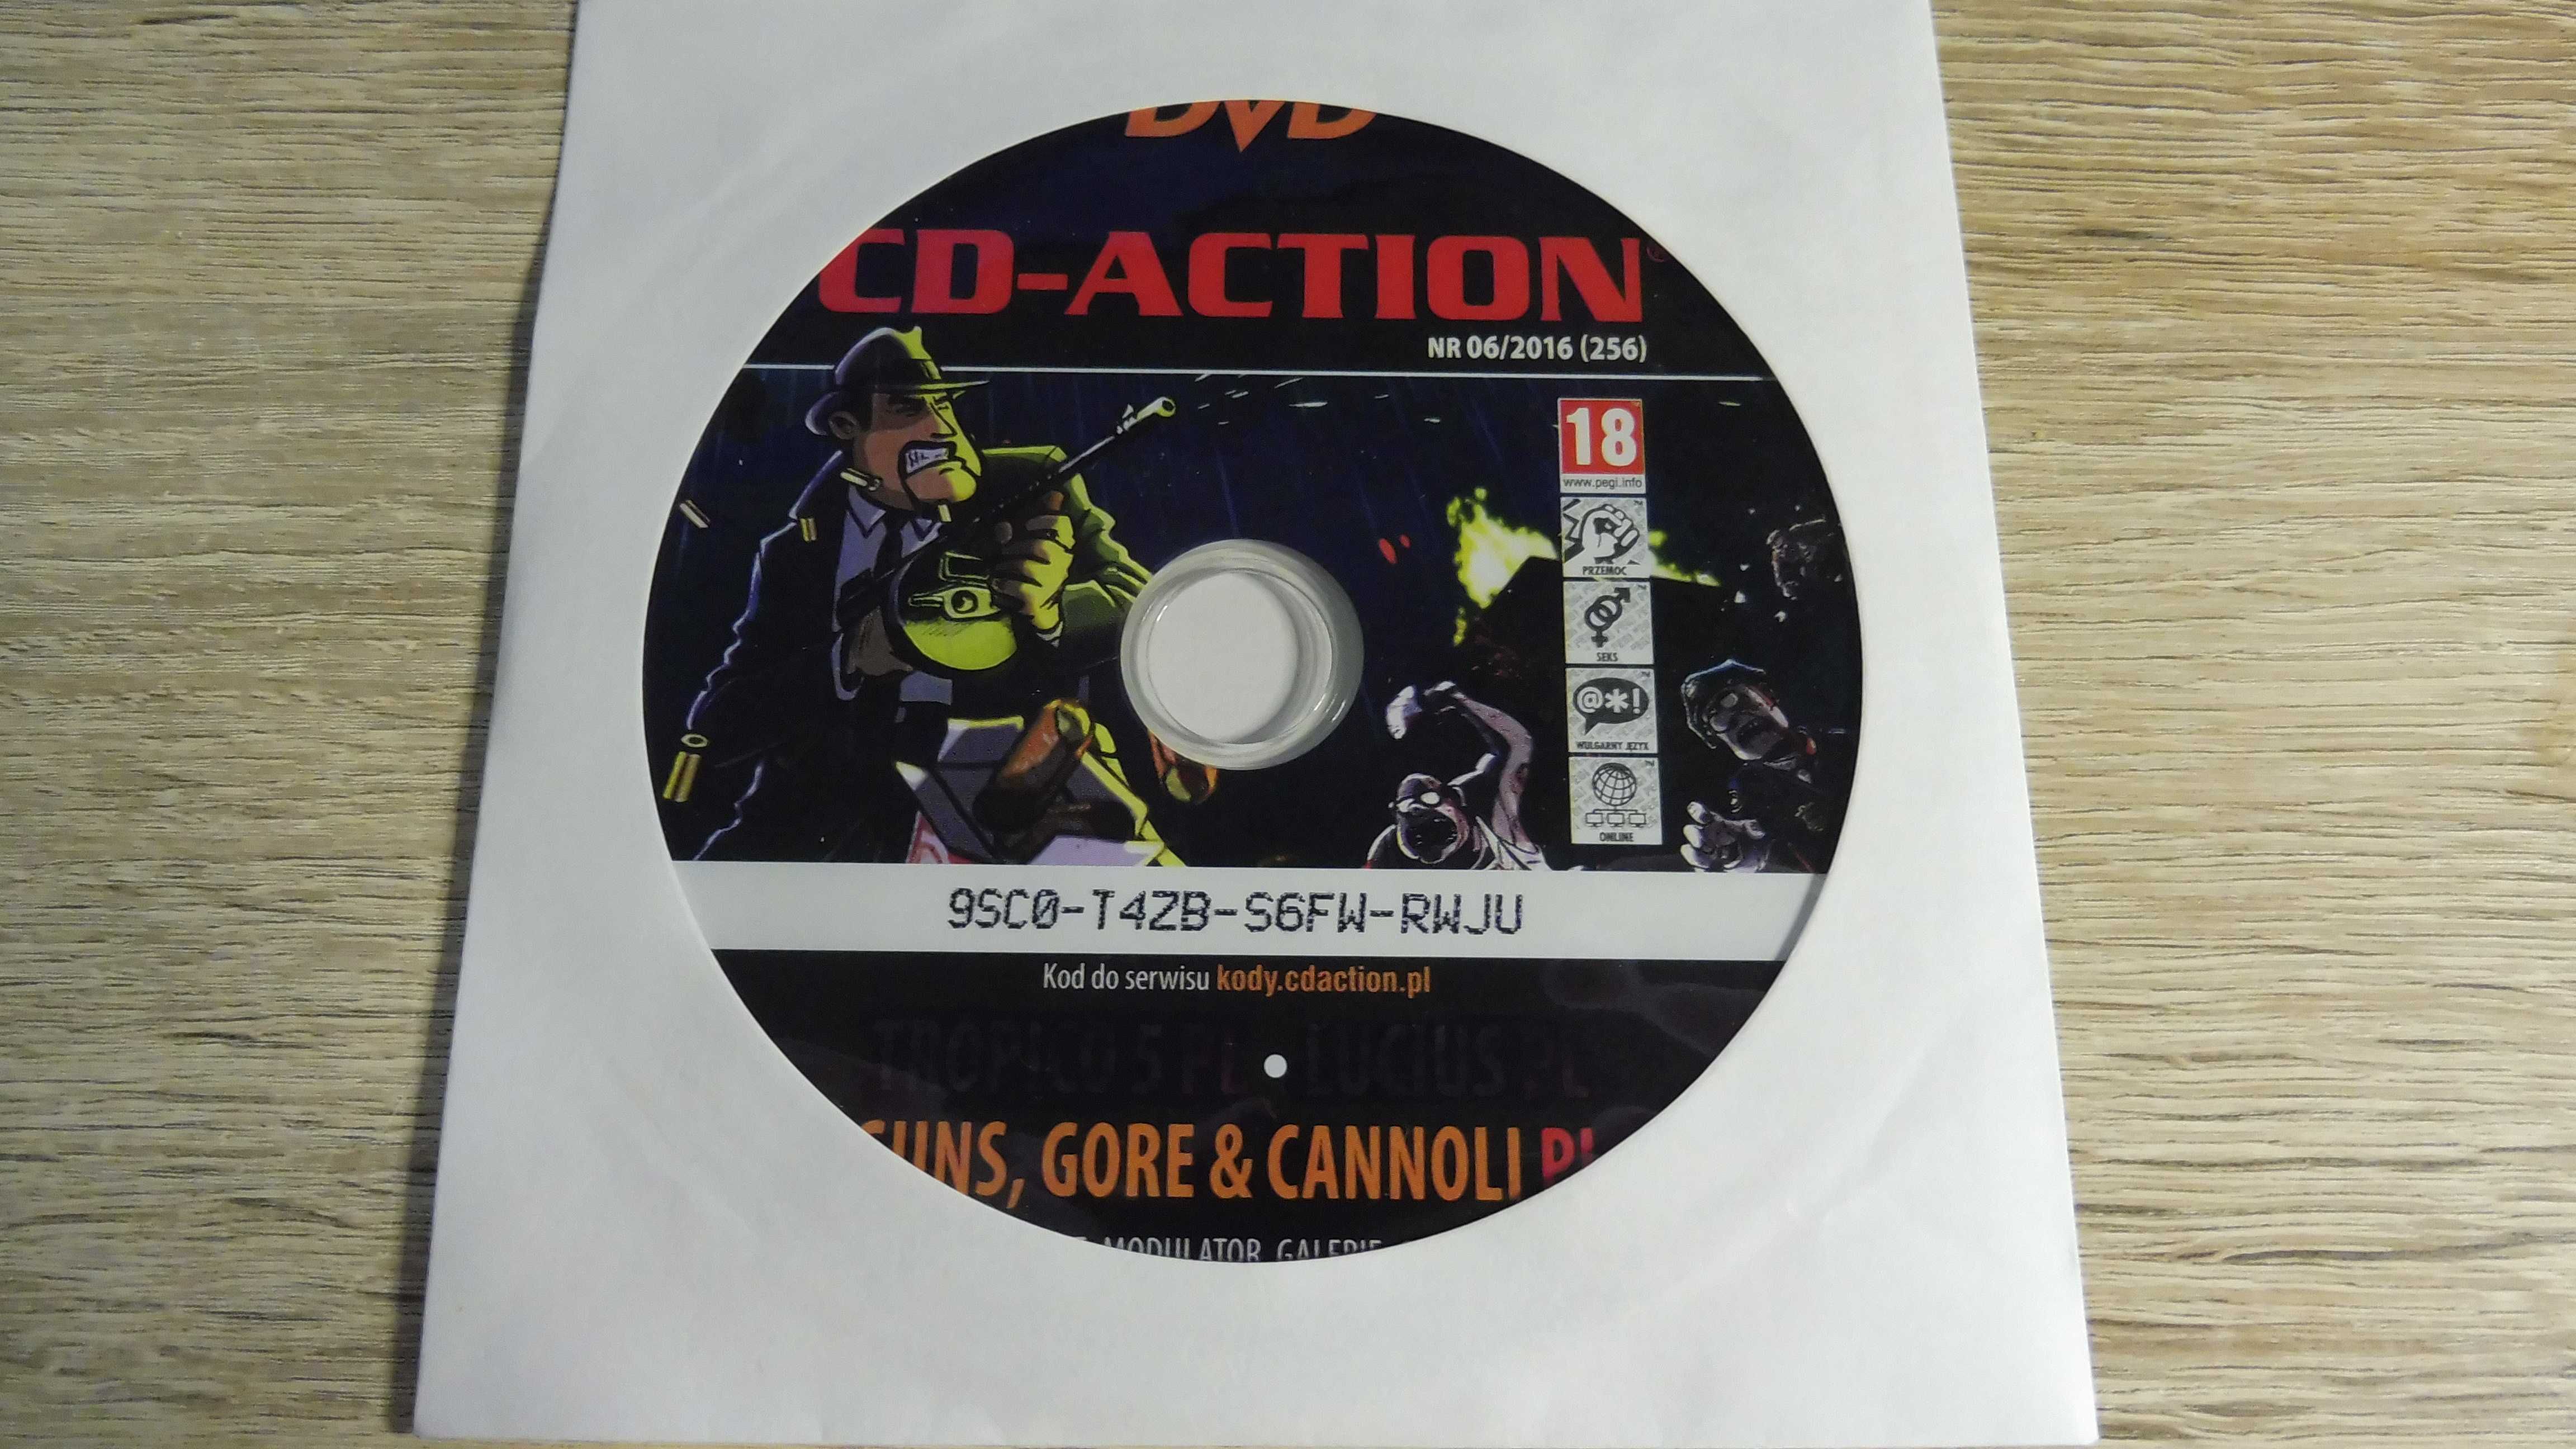 CD Action 06/2016 (256) - Guns, Gore & Cannoli PL